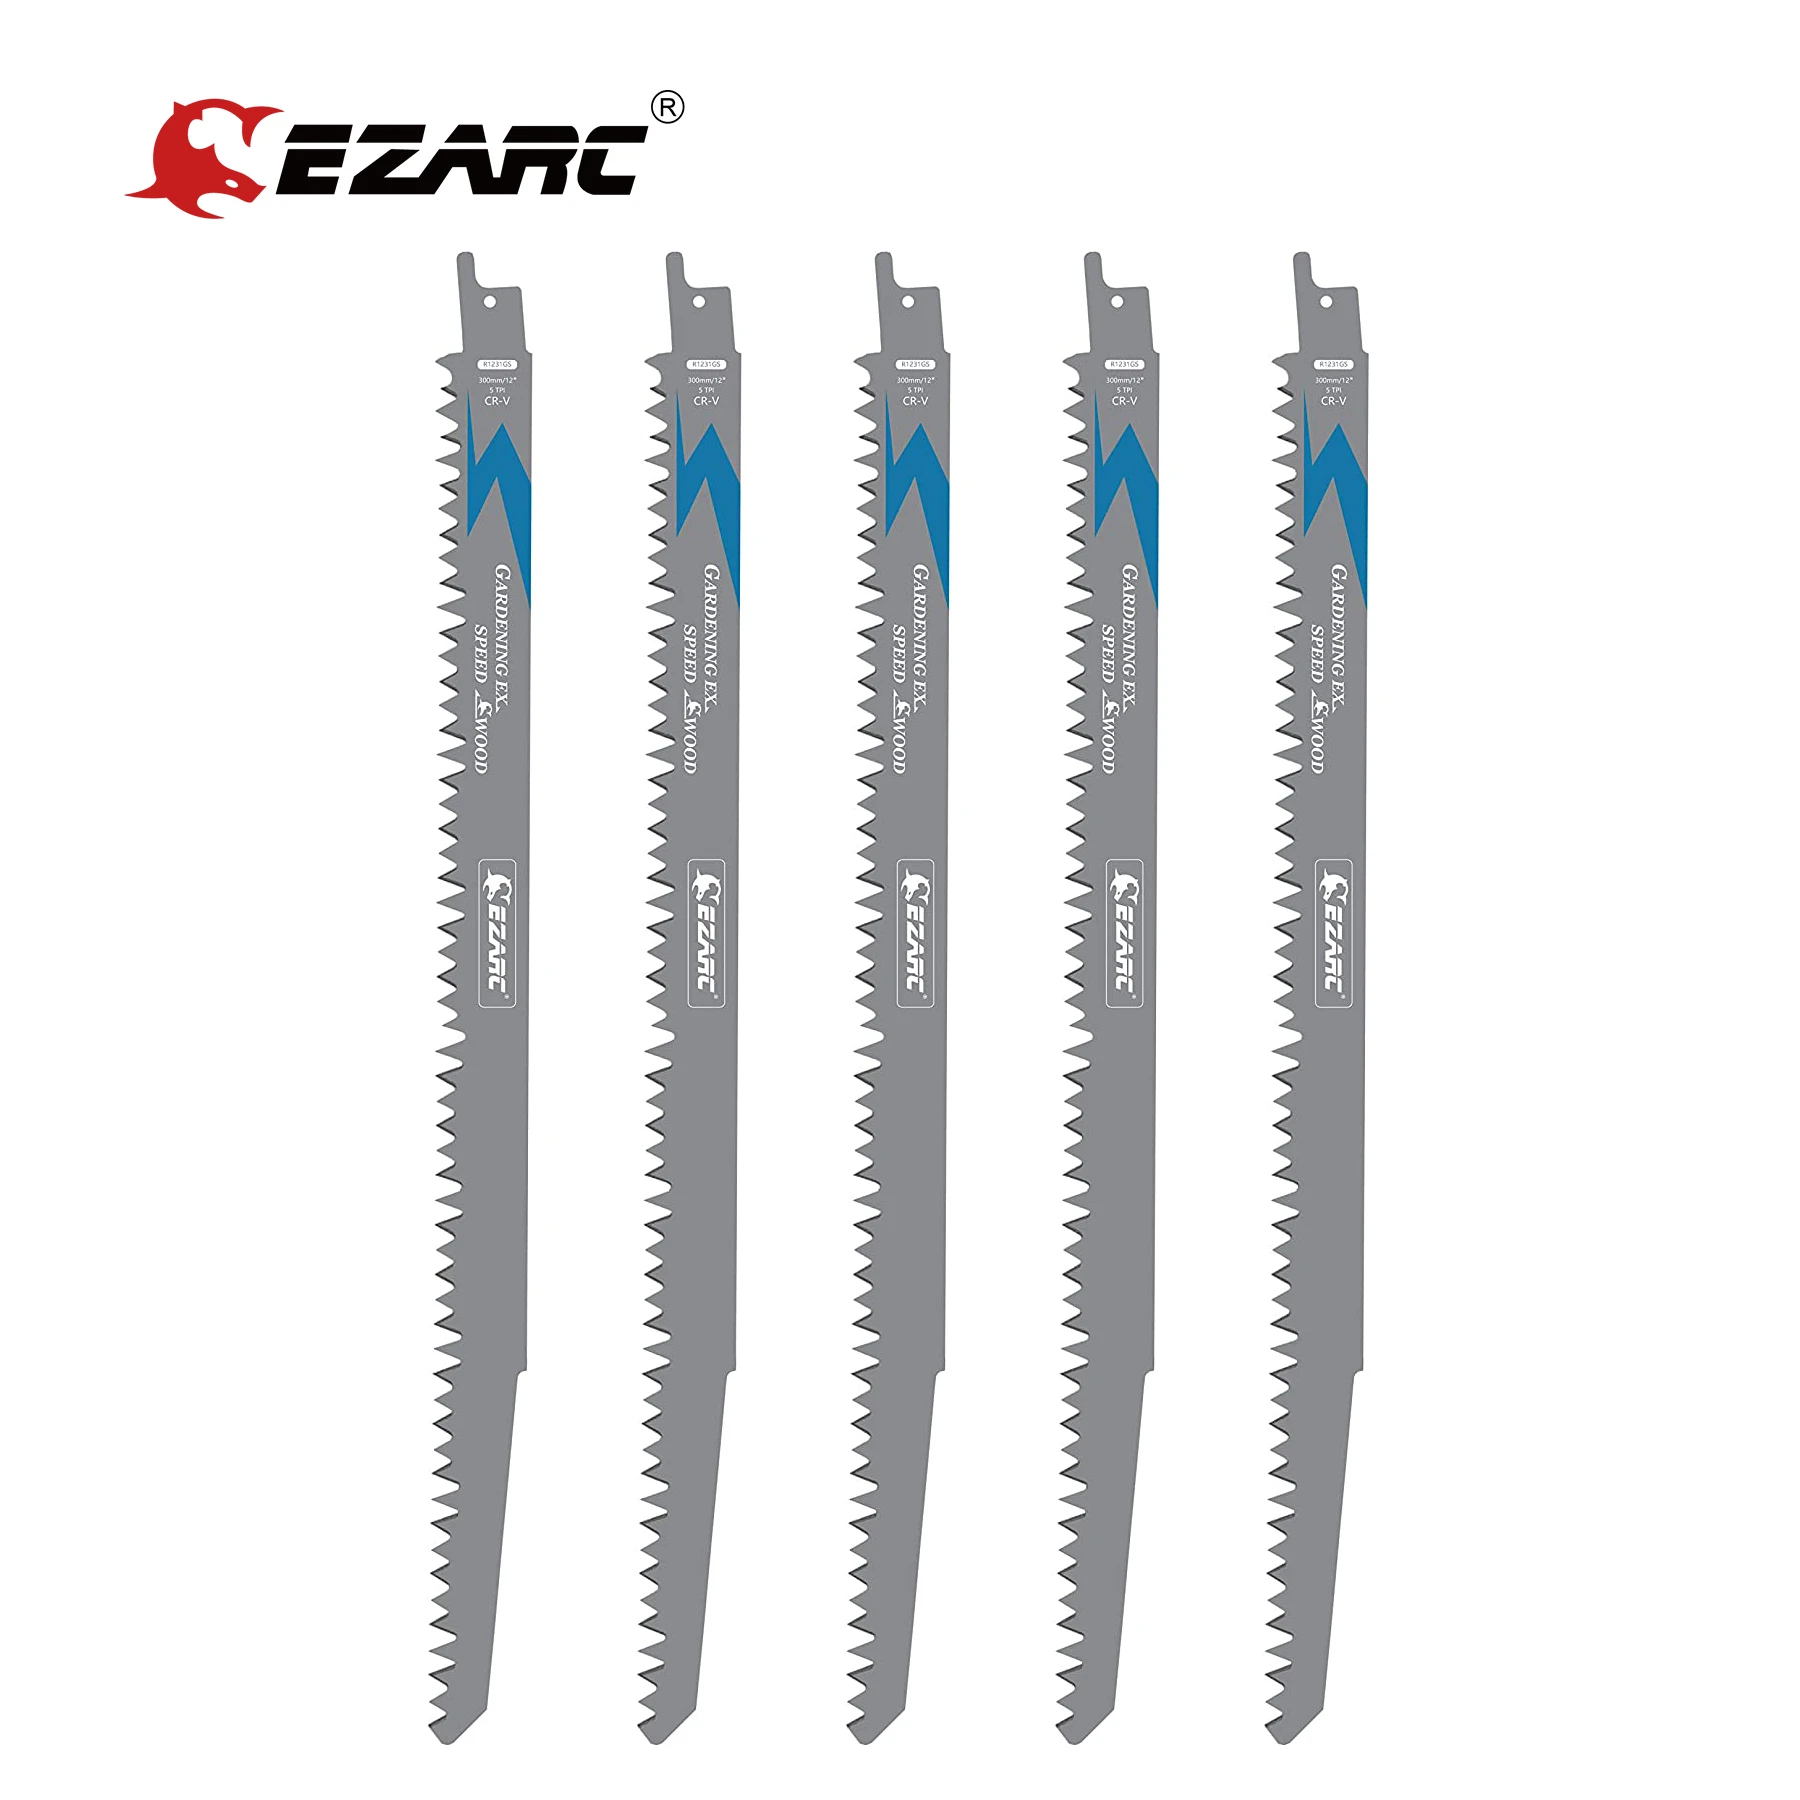 EZARC 5Pcs Wood Pruning Reciprocating Saw Blade Sharp Ground Teeth CRV Long Lifetime Sabre Saw Blades 5TPI (150mm, 225mm, 300mm)